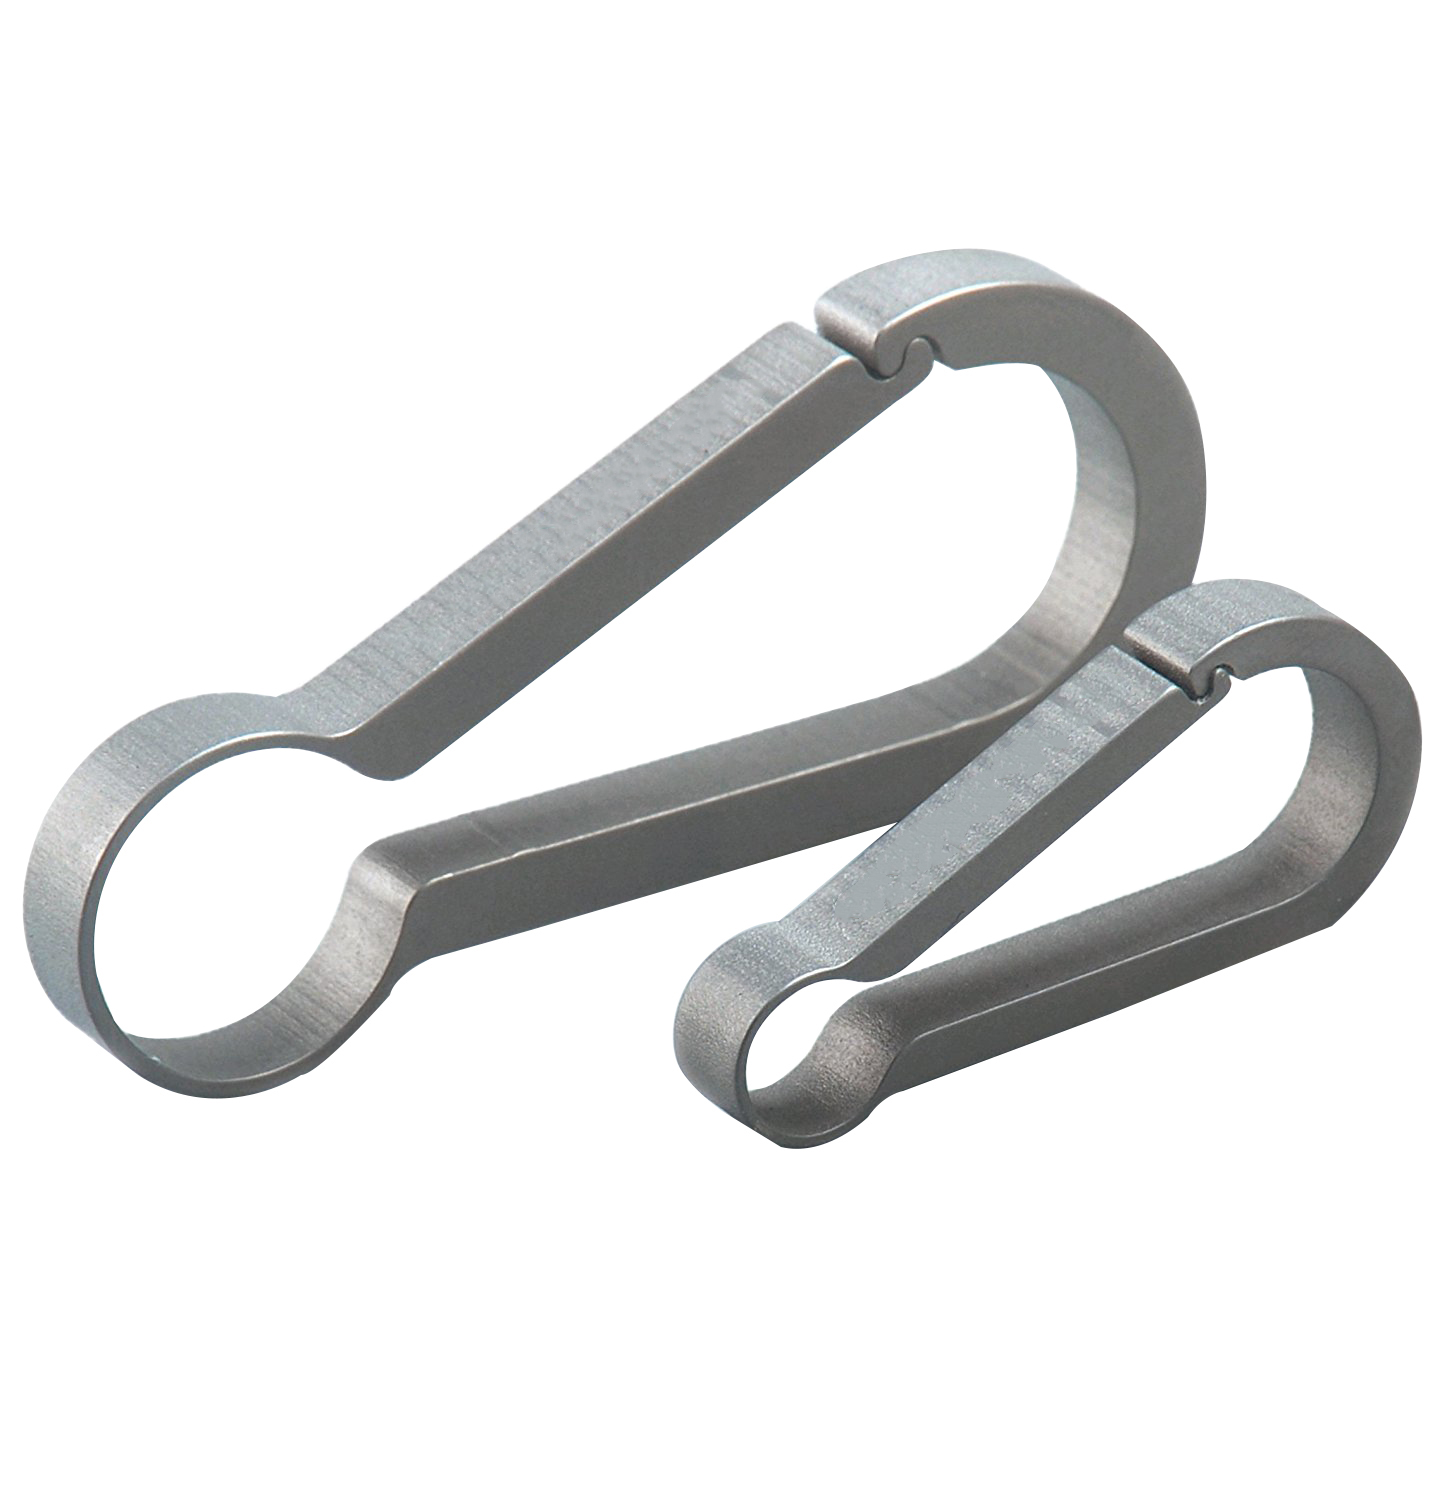 

BANG TI Customized H1 37mm Titanium Quick Release Keychain Belt Loop Hook Key Clip